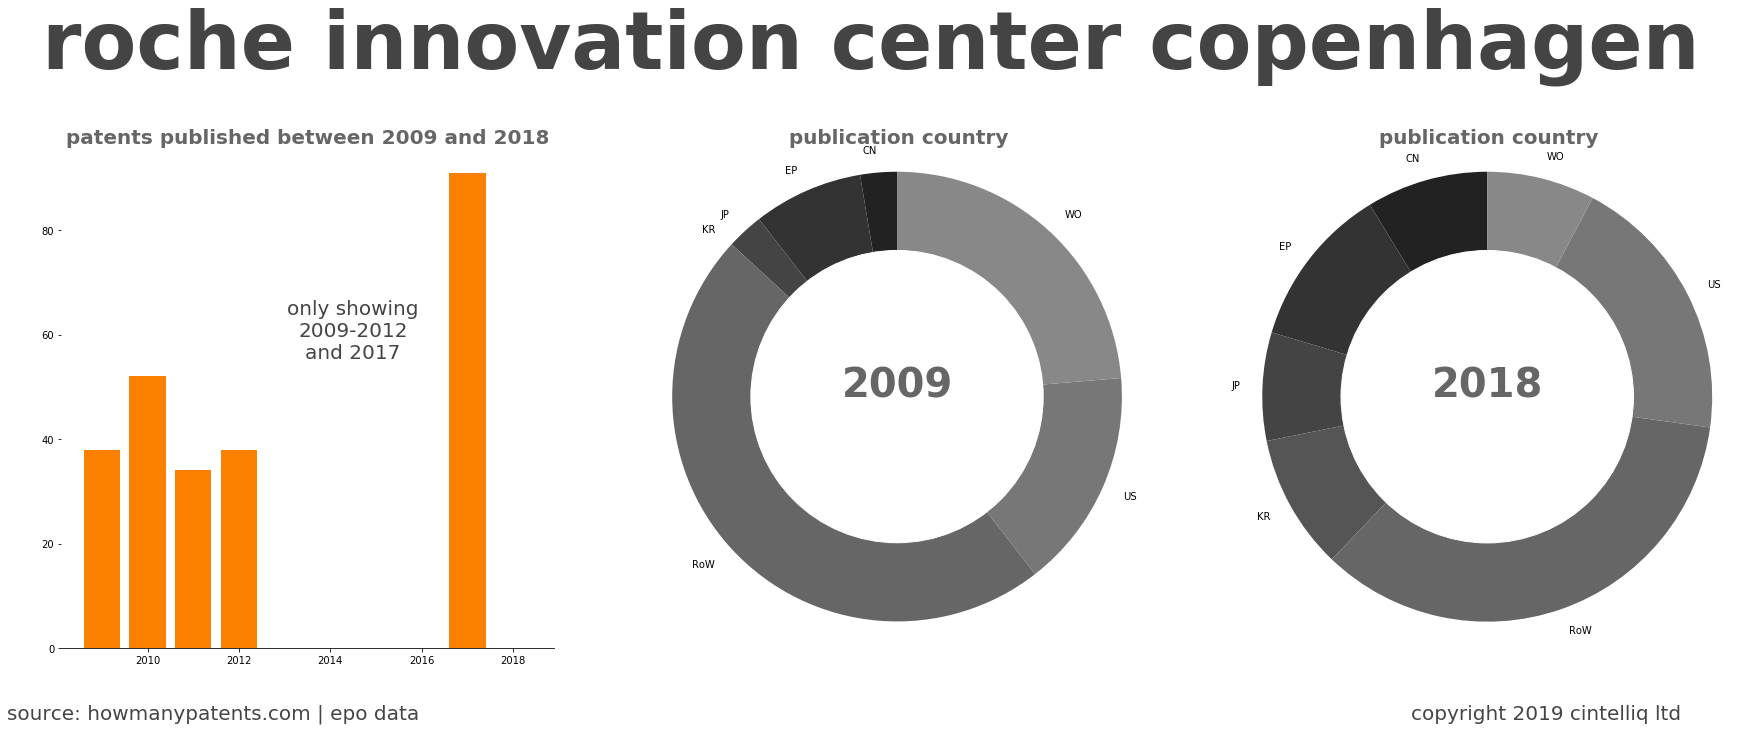 summary of patents for Roche Innovation Center Copenhagen